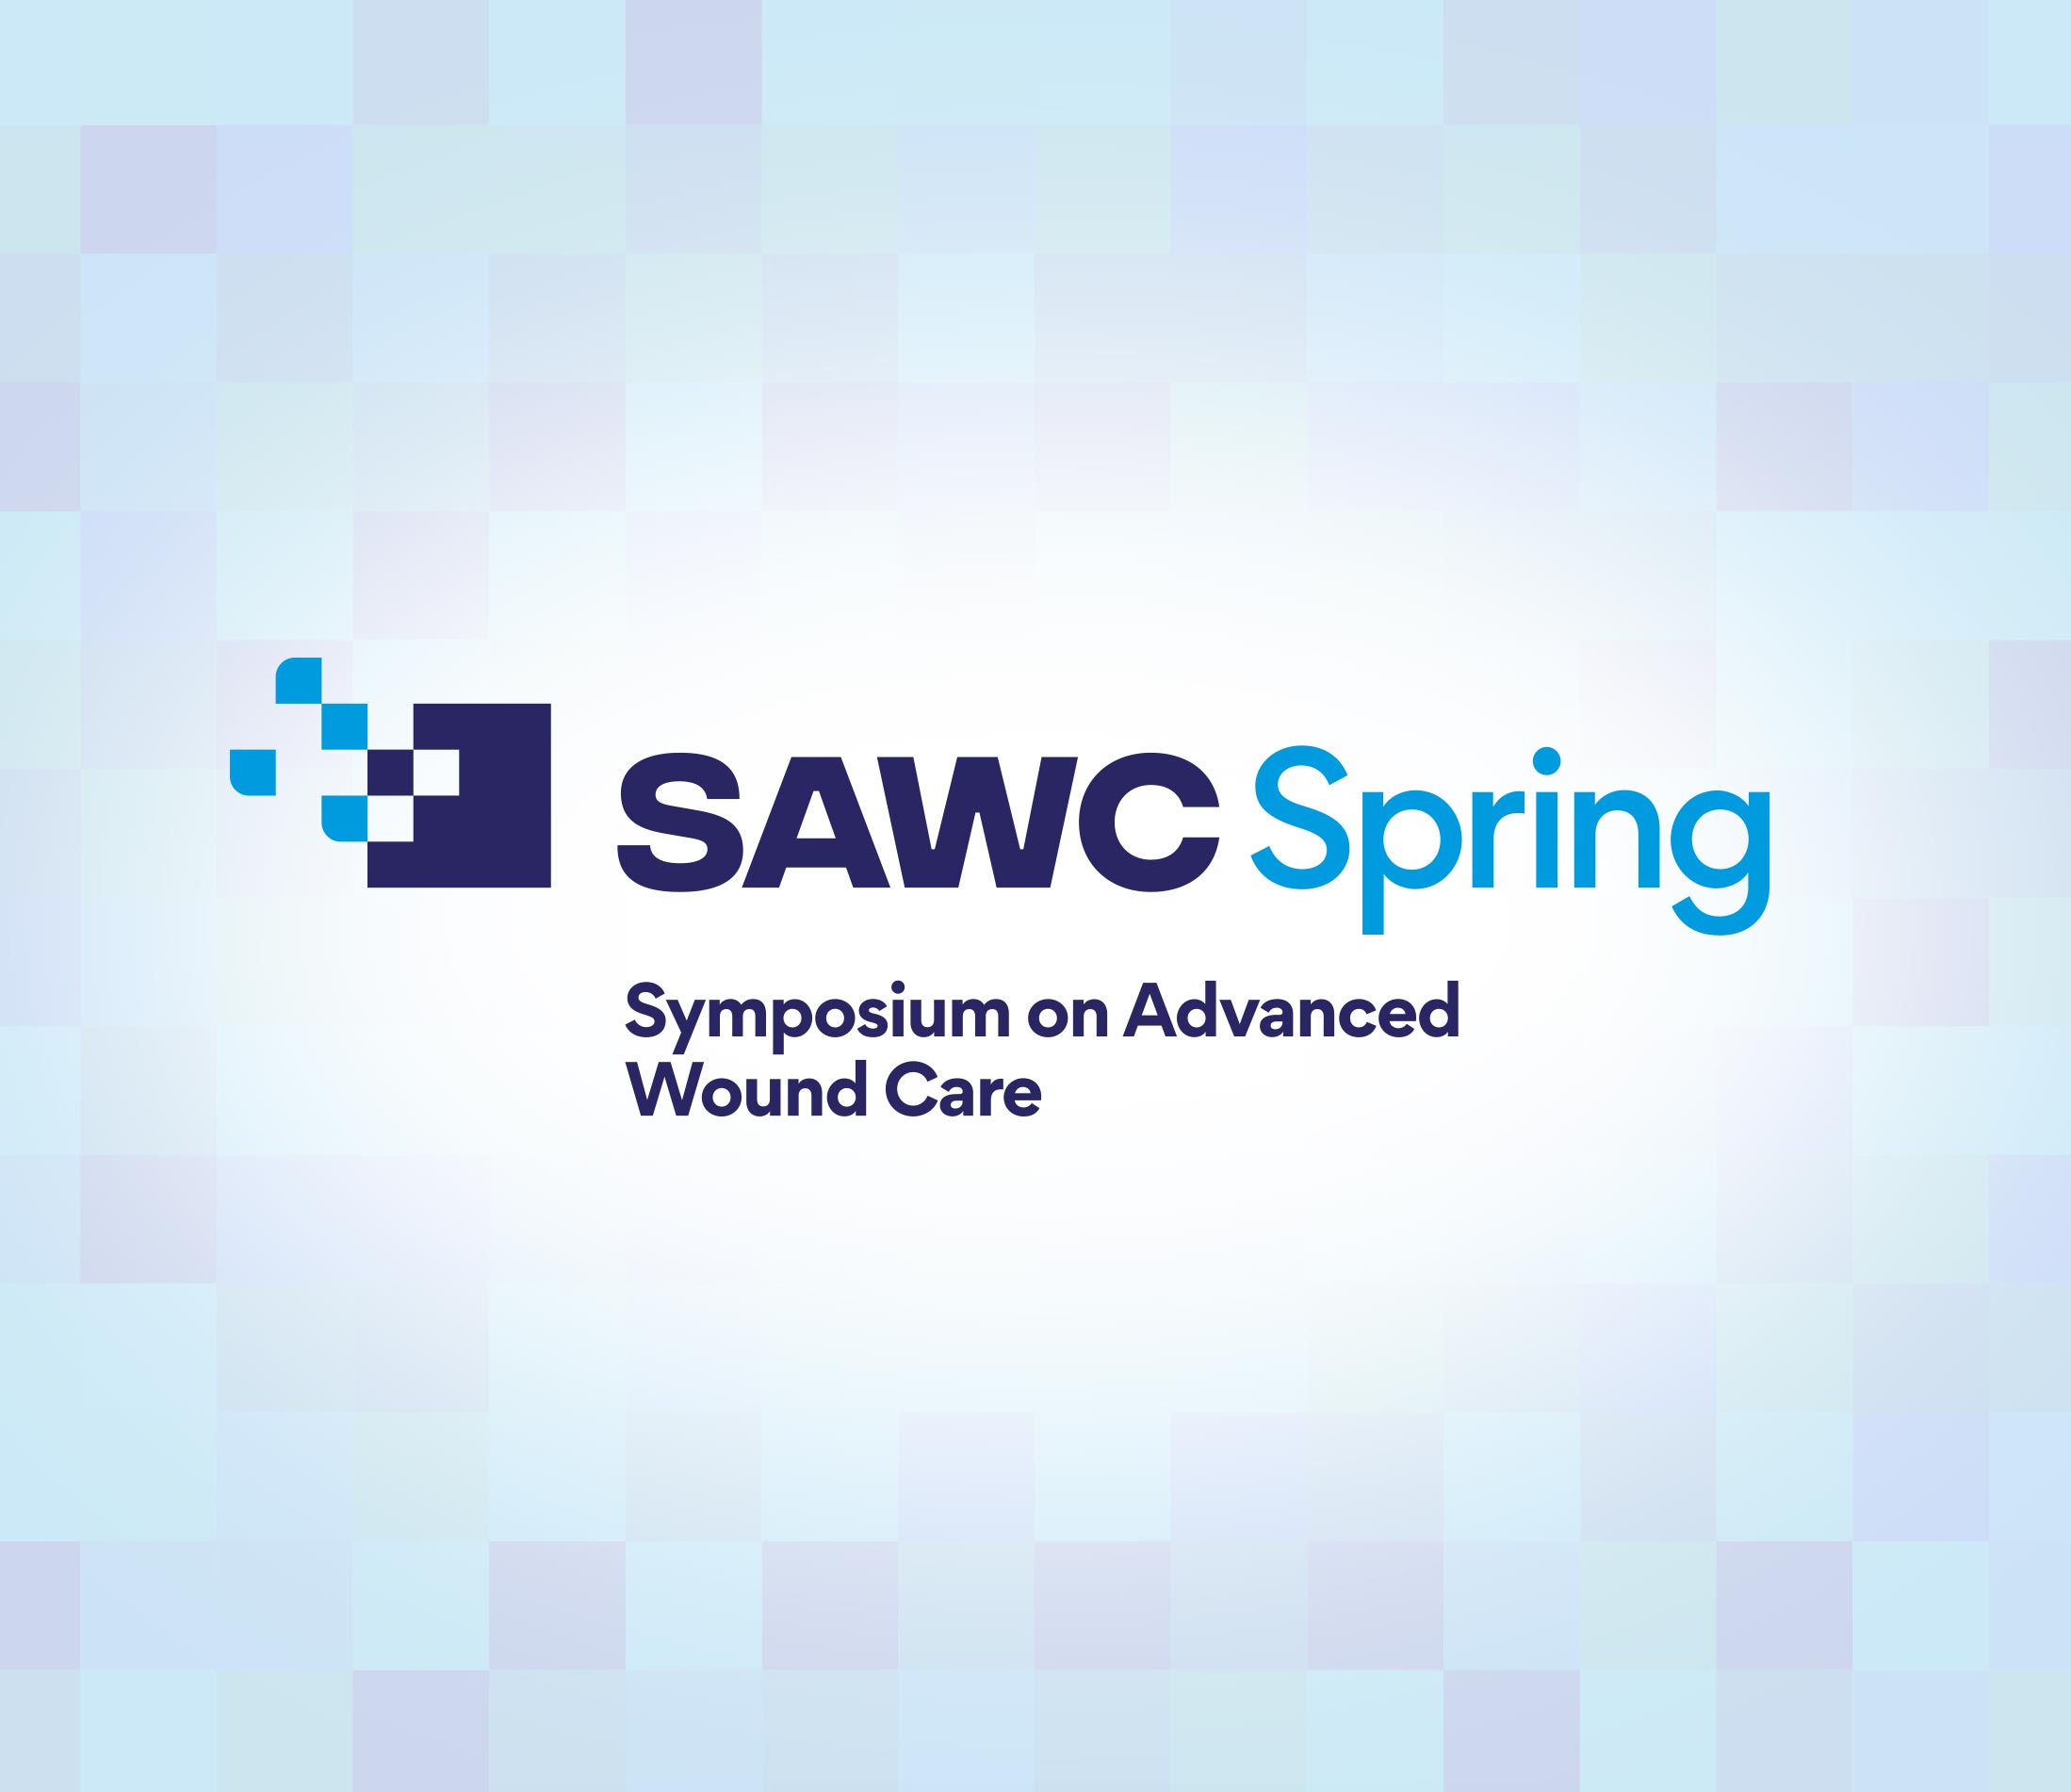 SAWC Spring - Symposium on Advanced Wound Care | Kerecis